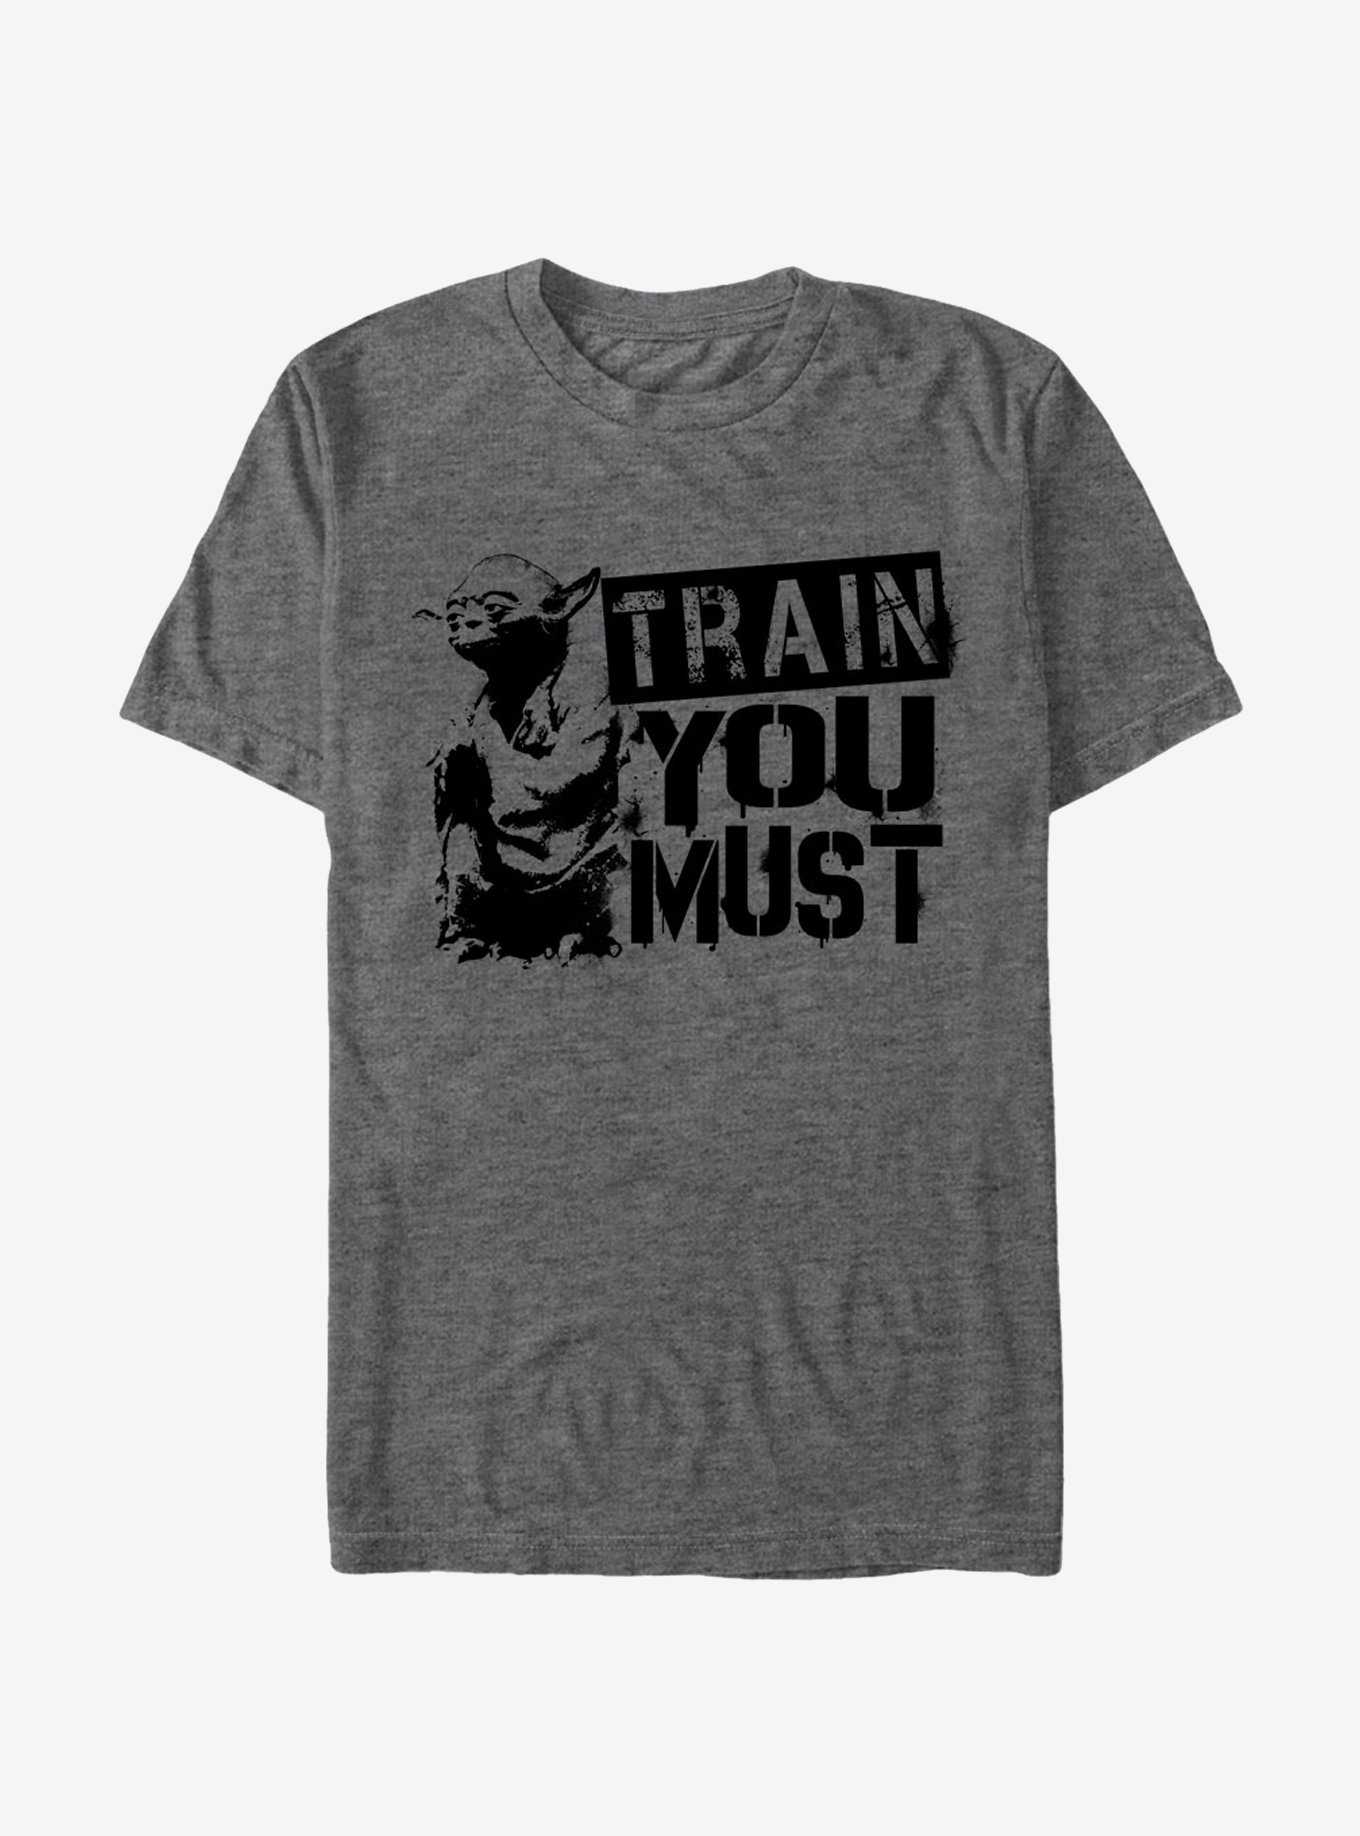 Star Wars Yoda Train You Must T-Shirt, , hi-res